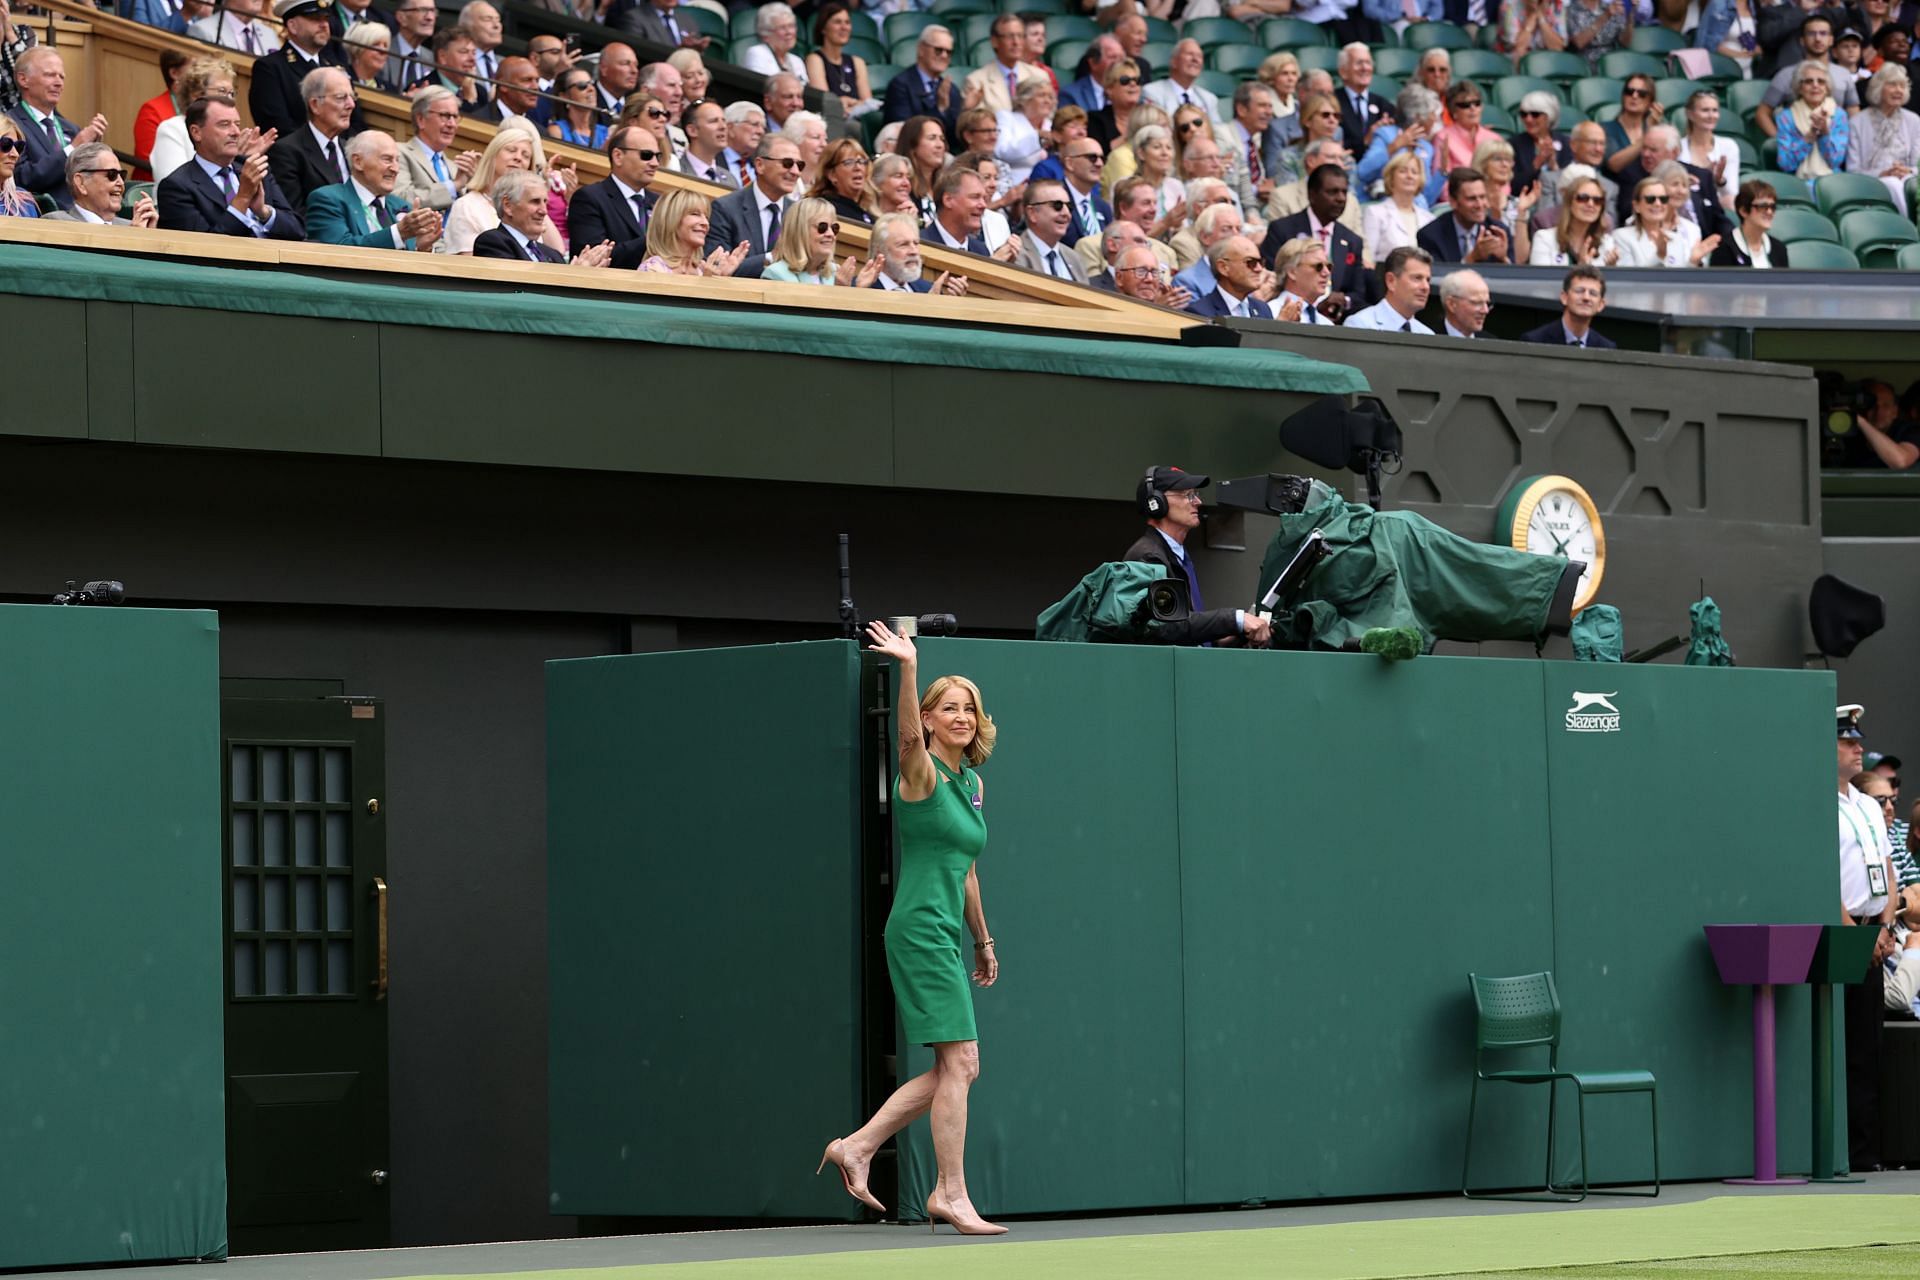 Chris Evert acknowledges spectators at the Centre Court centenary celebration at Wimbledon 2022